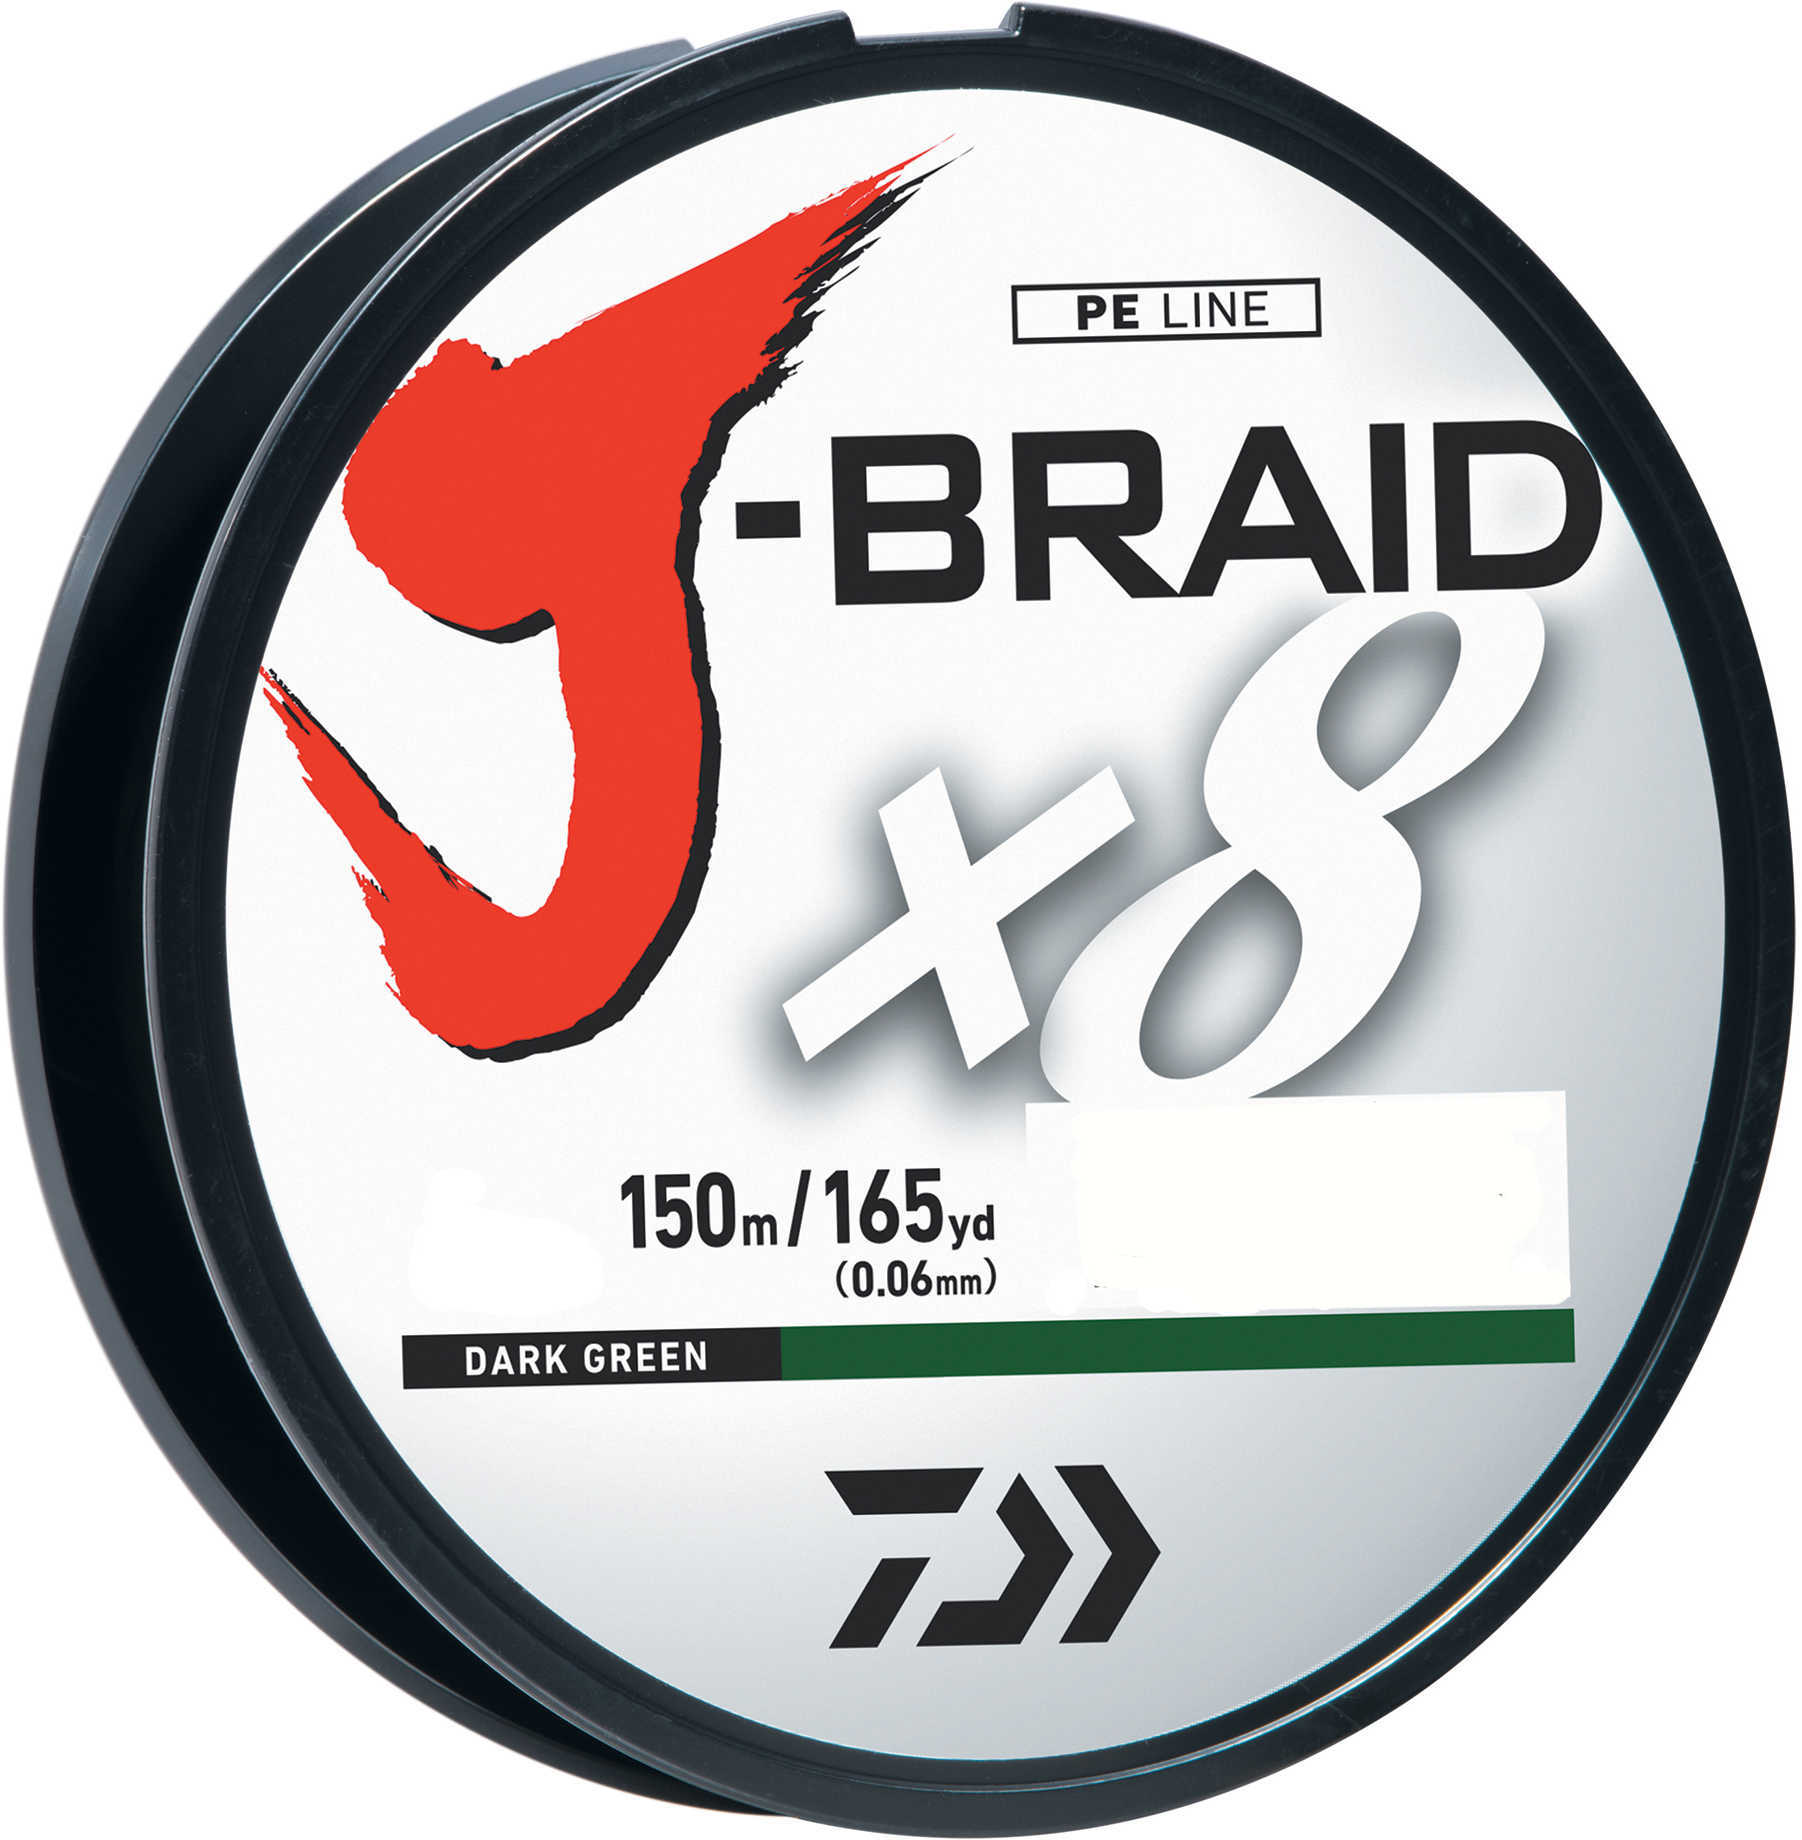 J-Braid Braided Line 40 lbs Tested 165 Yards/150m-img-1